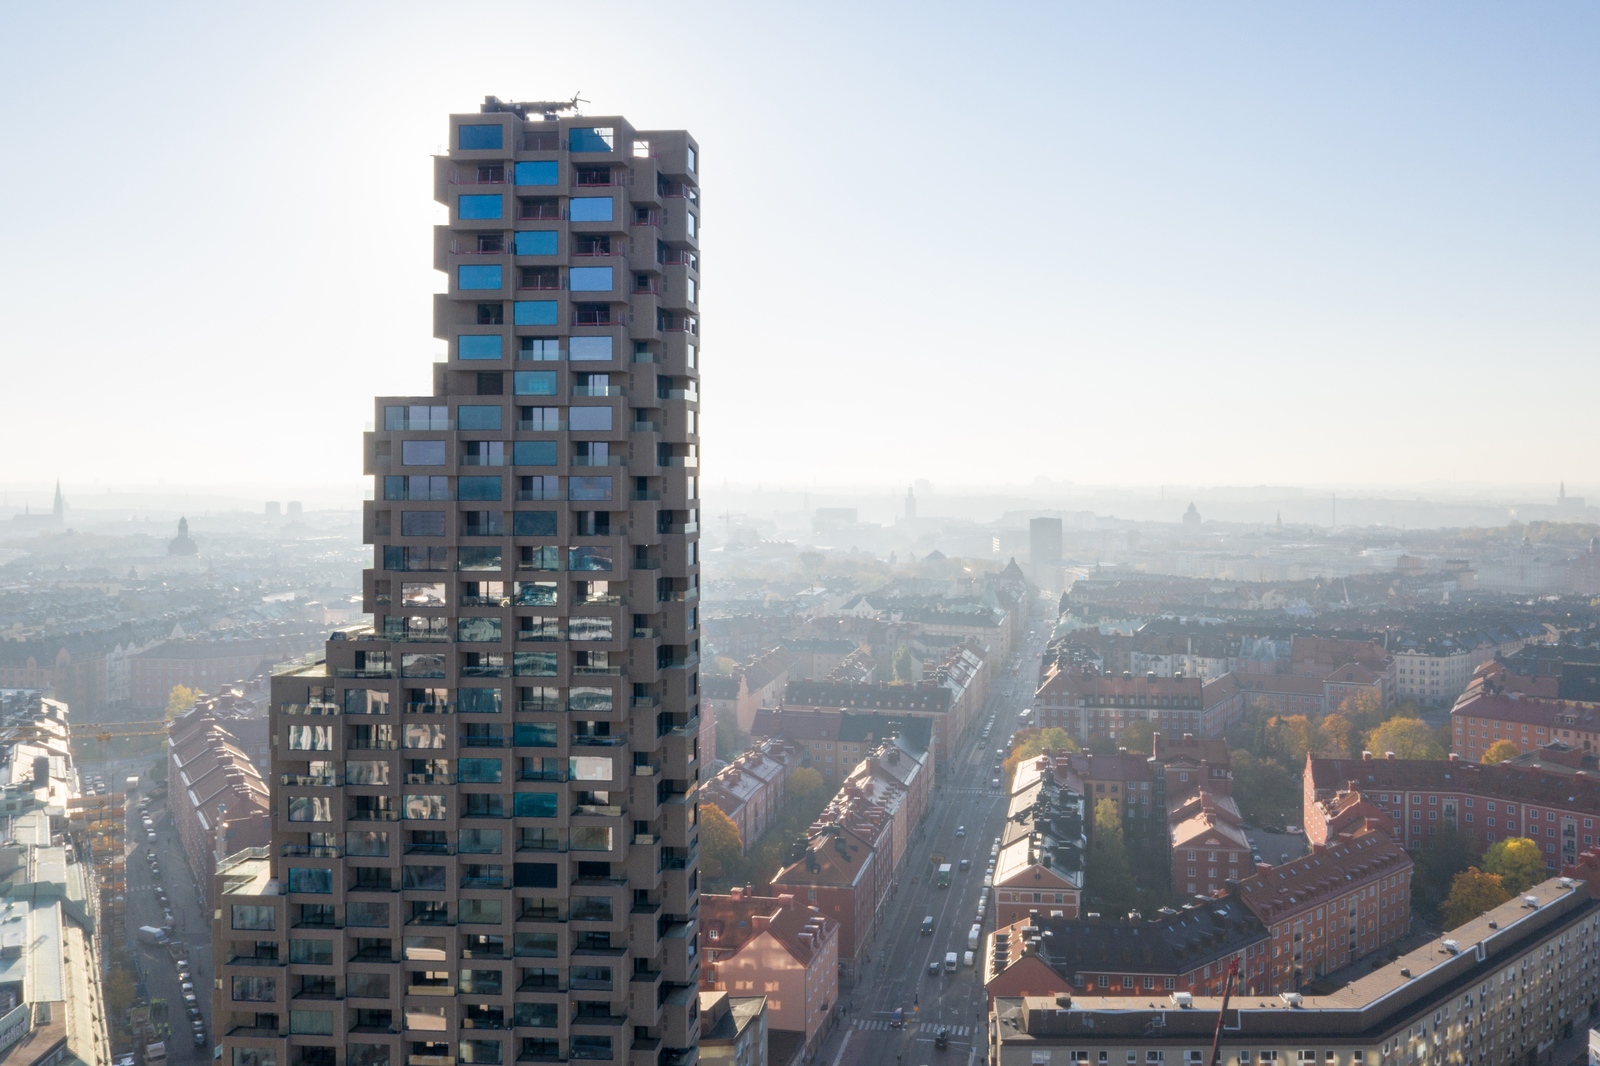 OMAの建築家 Reinier de Graafが手がける 高層建築プロジェクト「Norra 